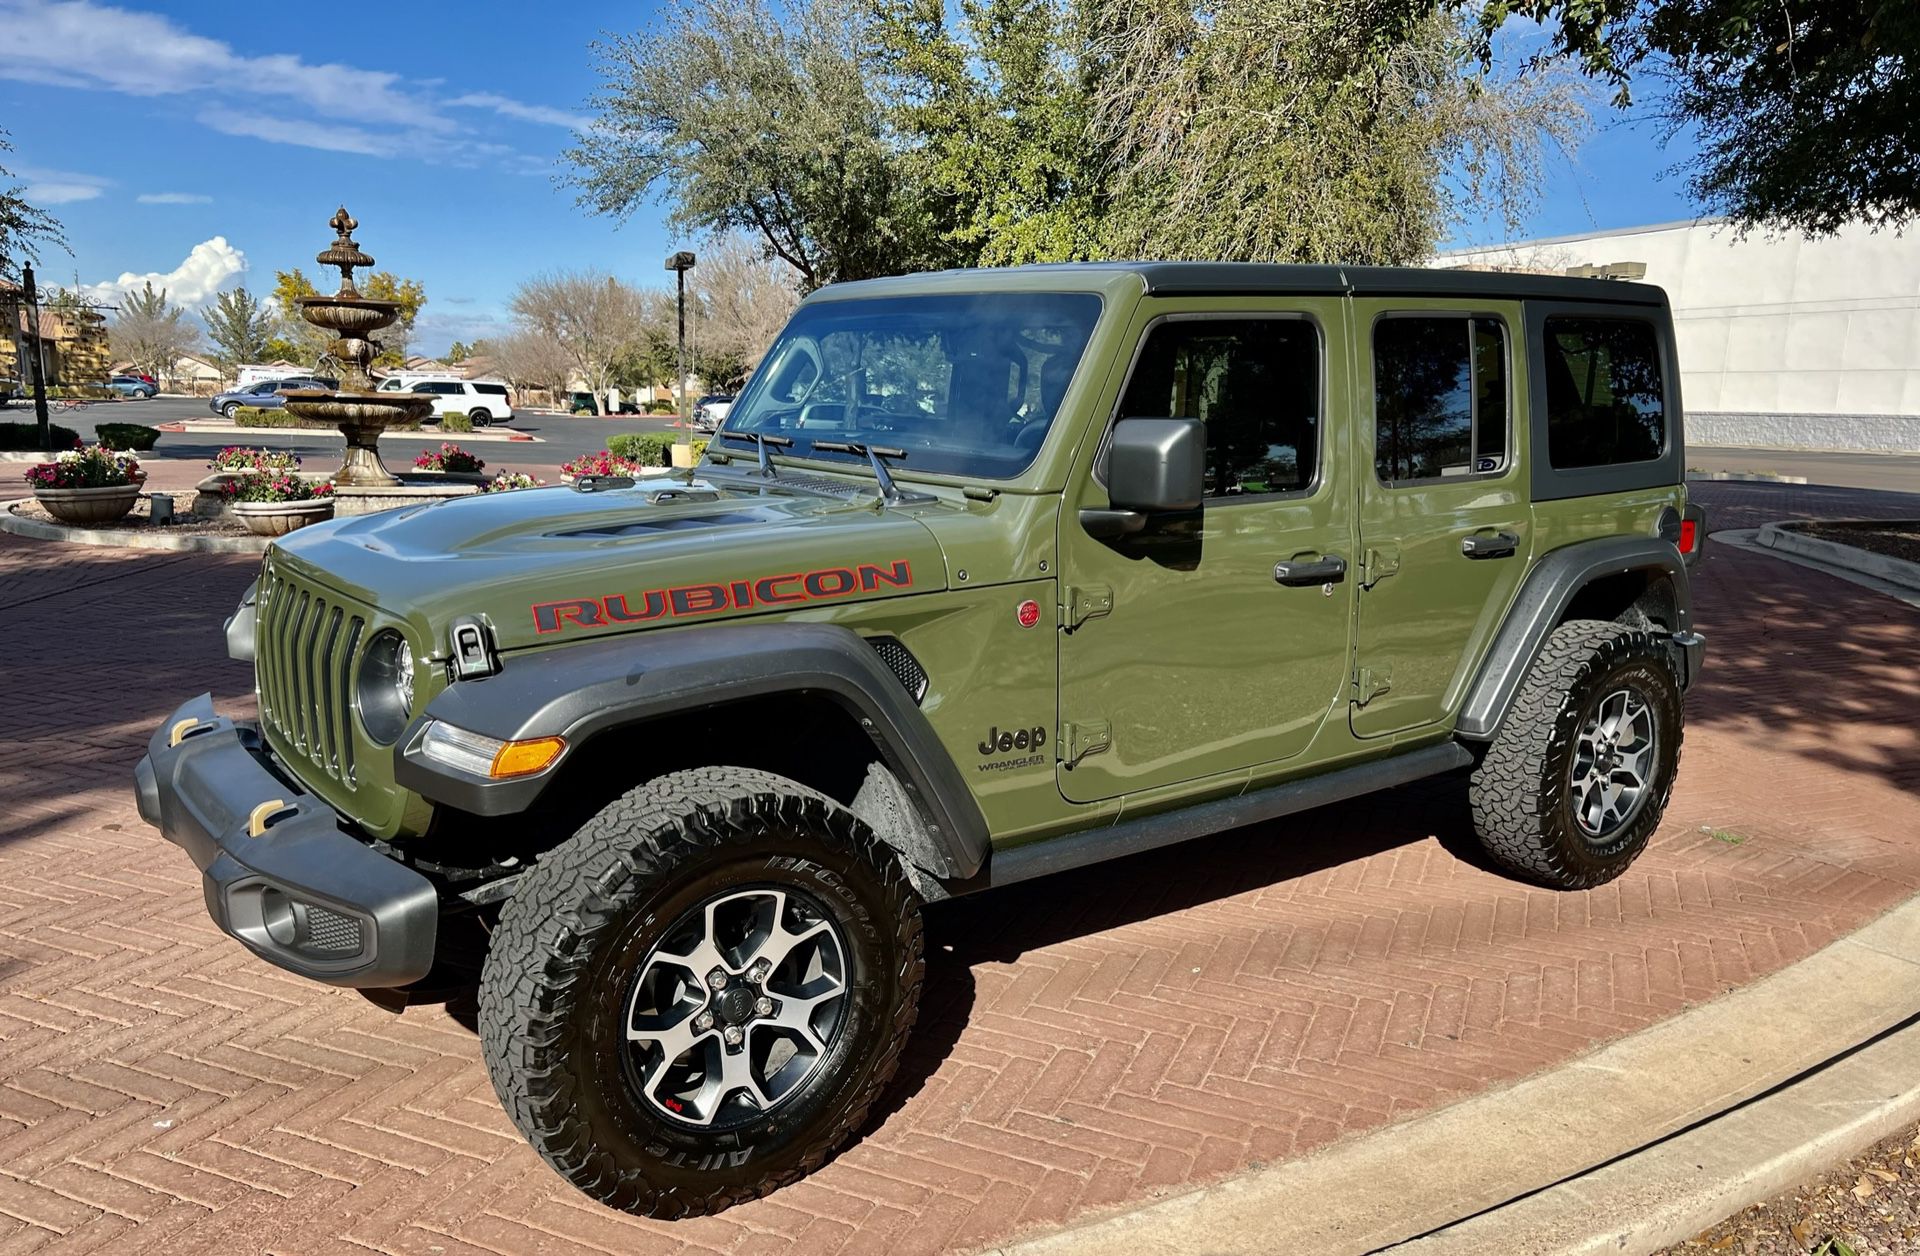 2021 Jeep Wrangler for Sale in Gilbert, AZ - OfferUp